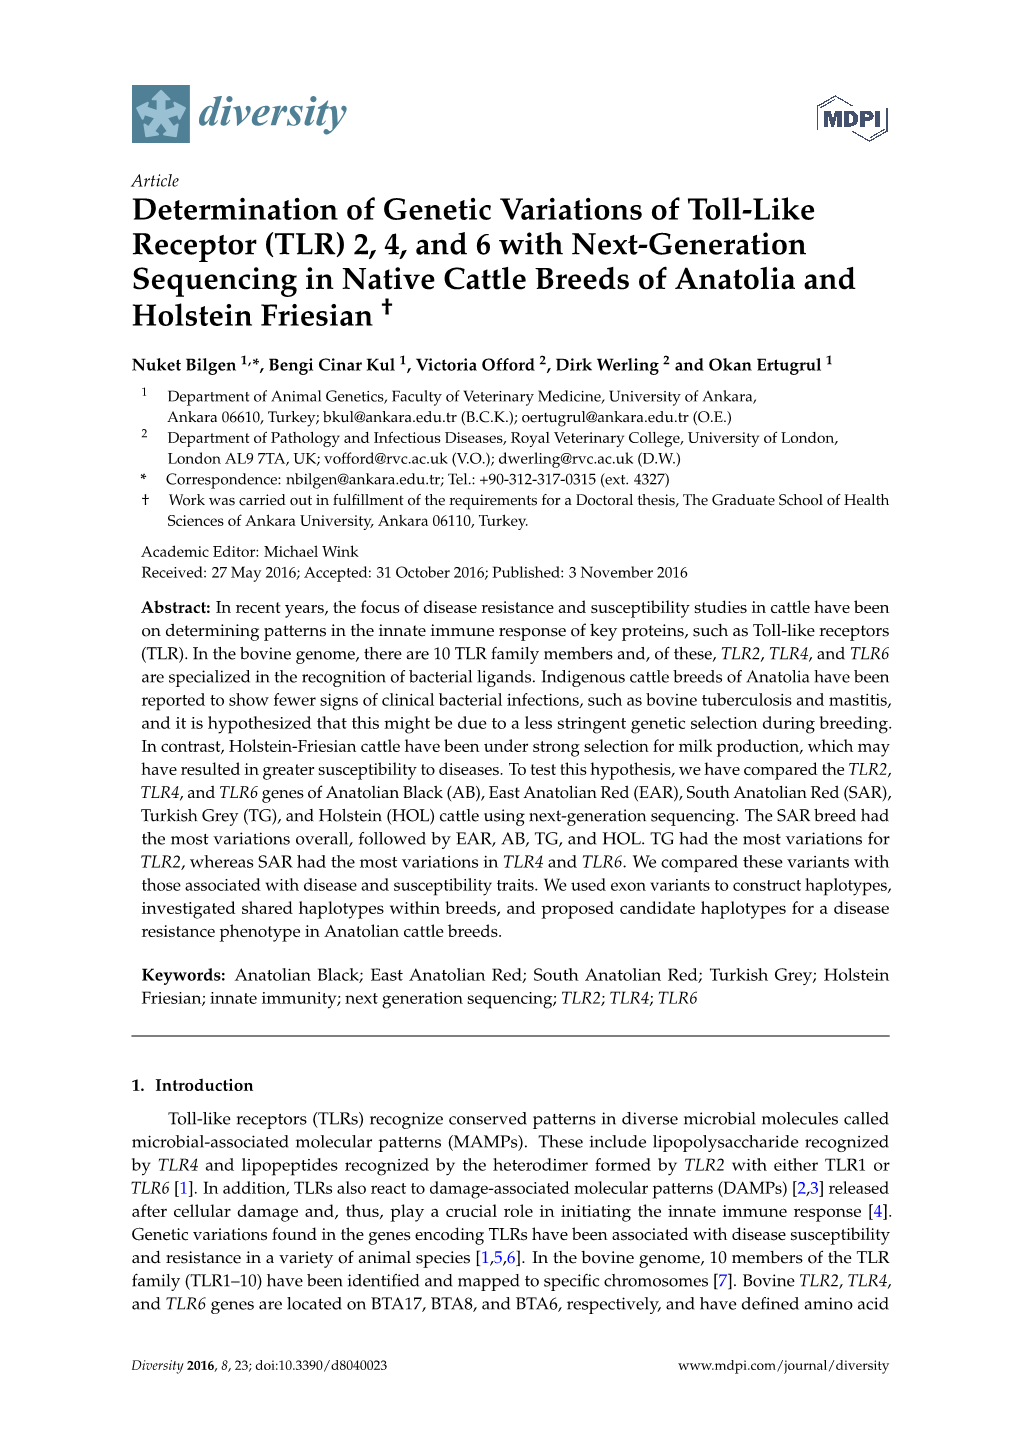 Determination of Genetic Variations of Toll-Like Receptor (TLR)